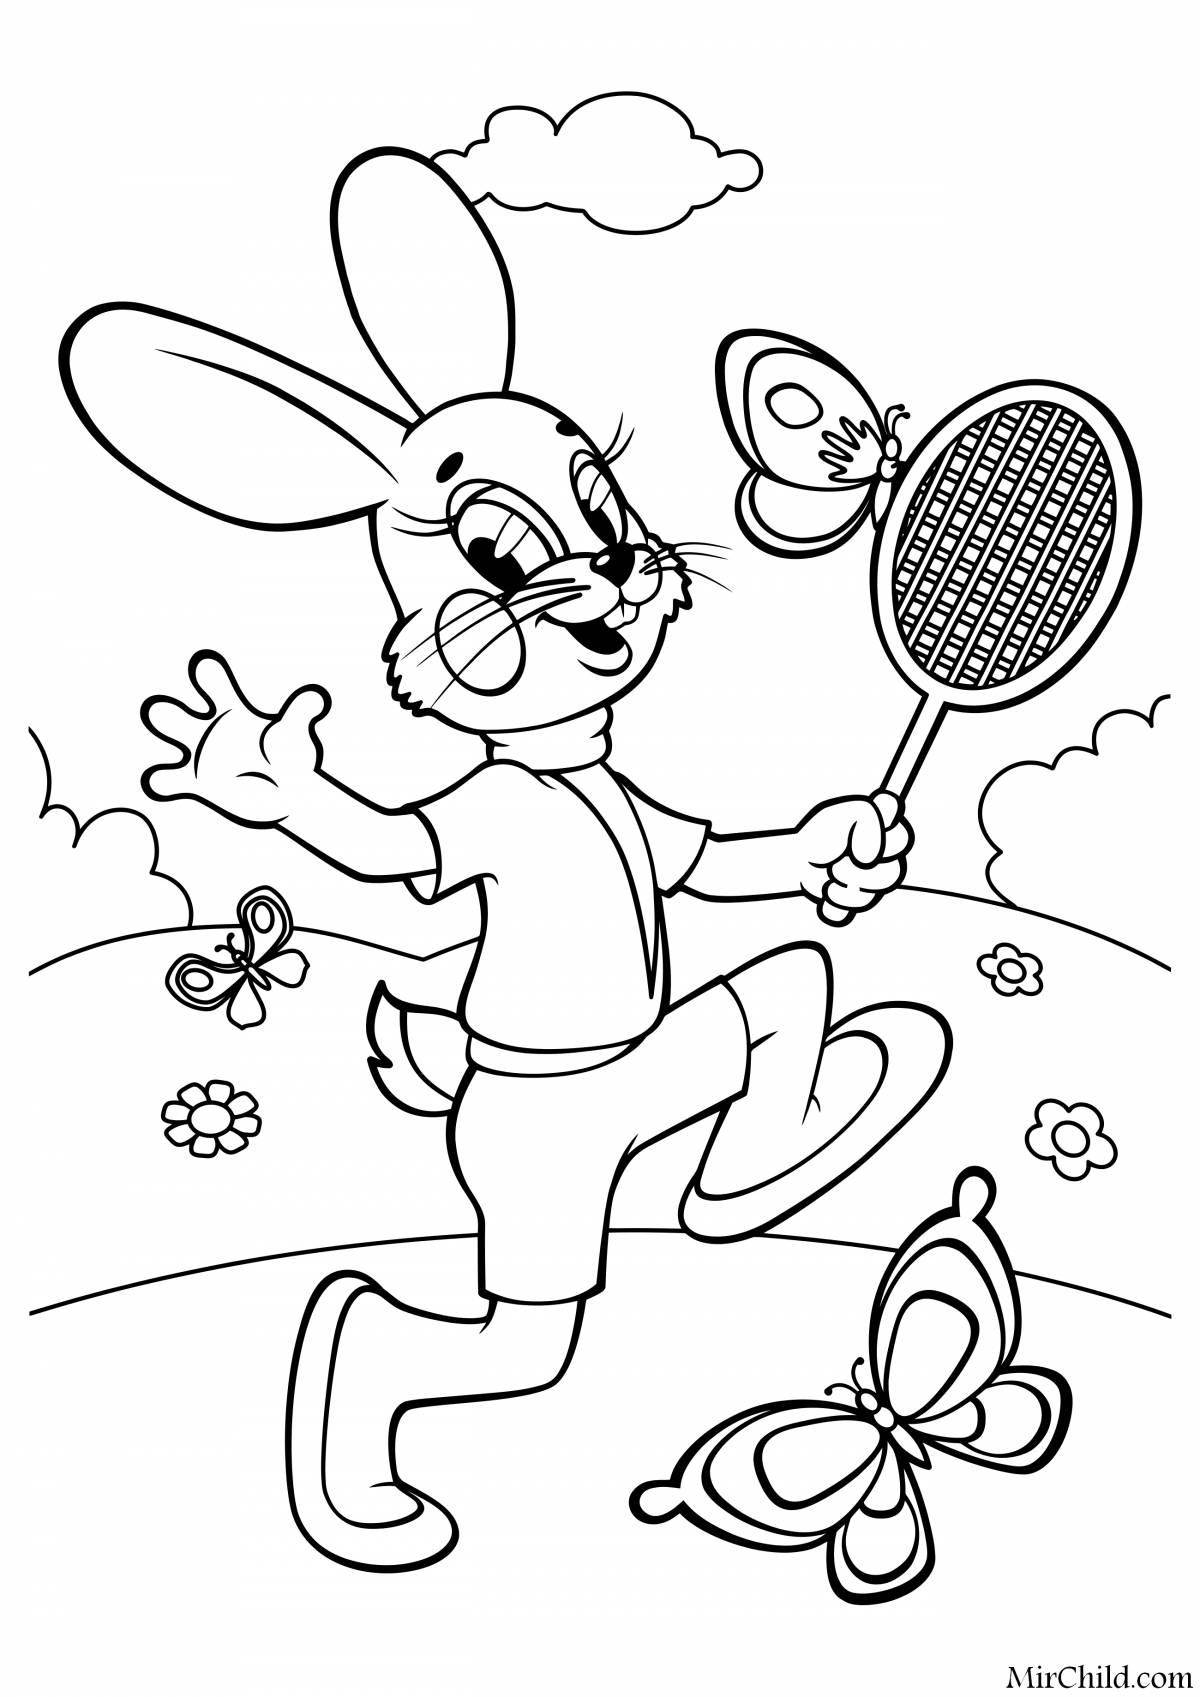 Dreamy hare coloring book